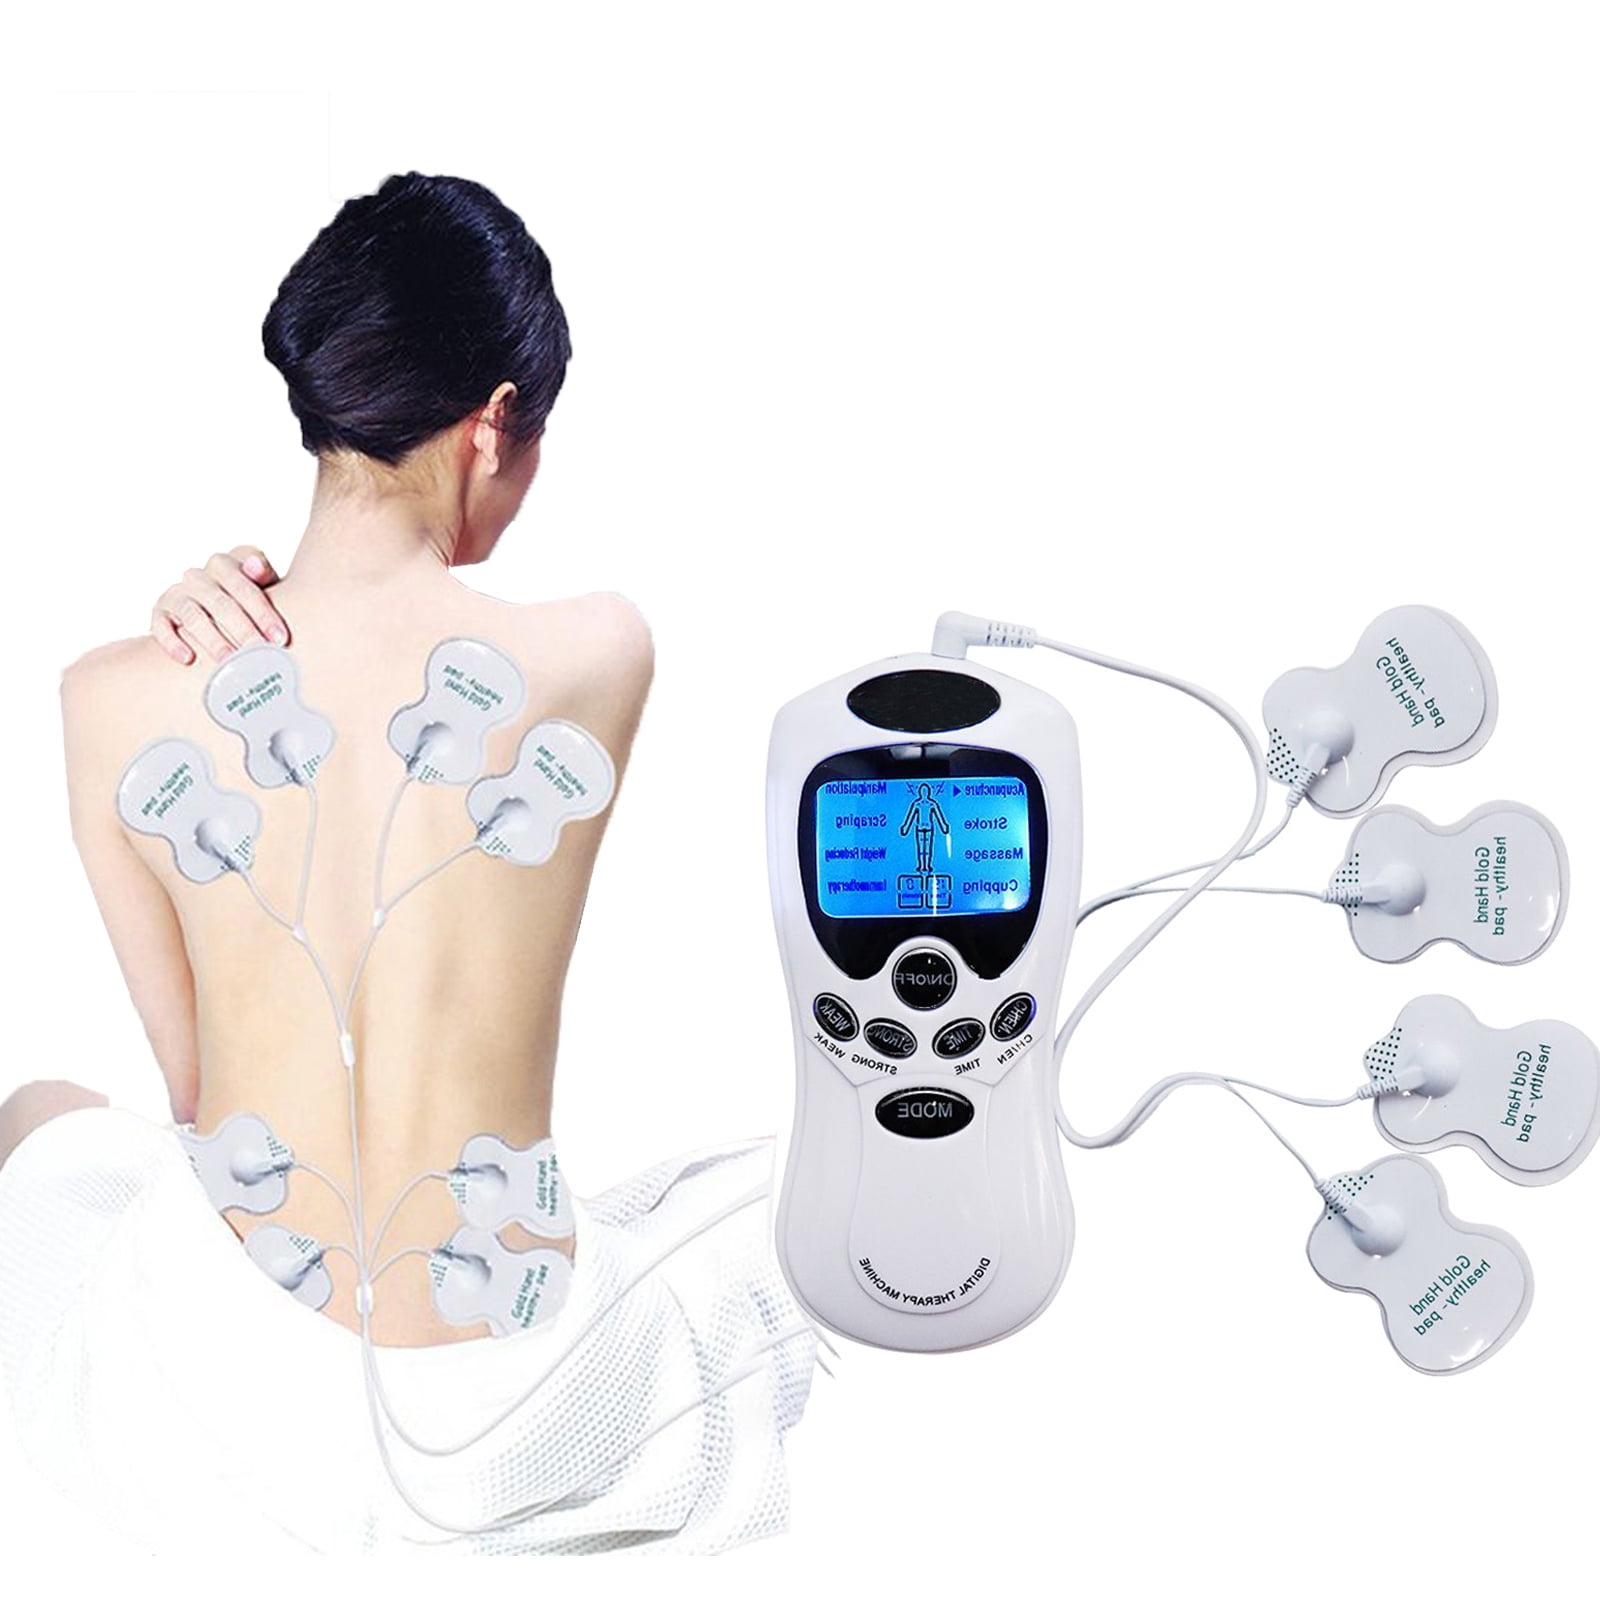 NMES/EMS Electric Muscle Stimulator Unit - Whole Body Massager